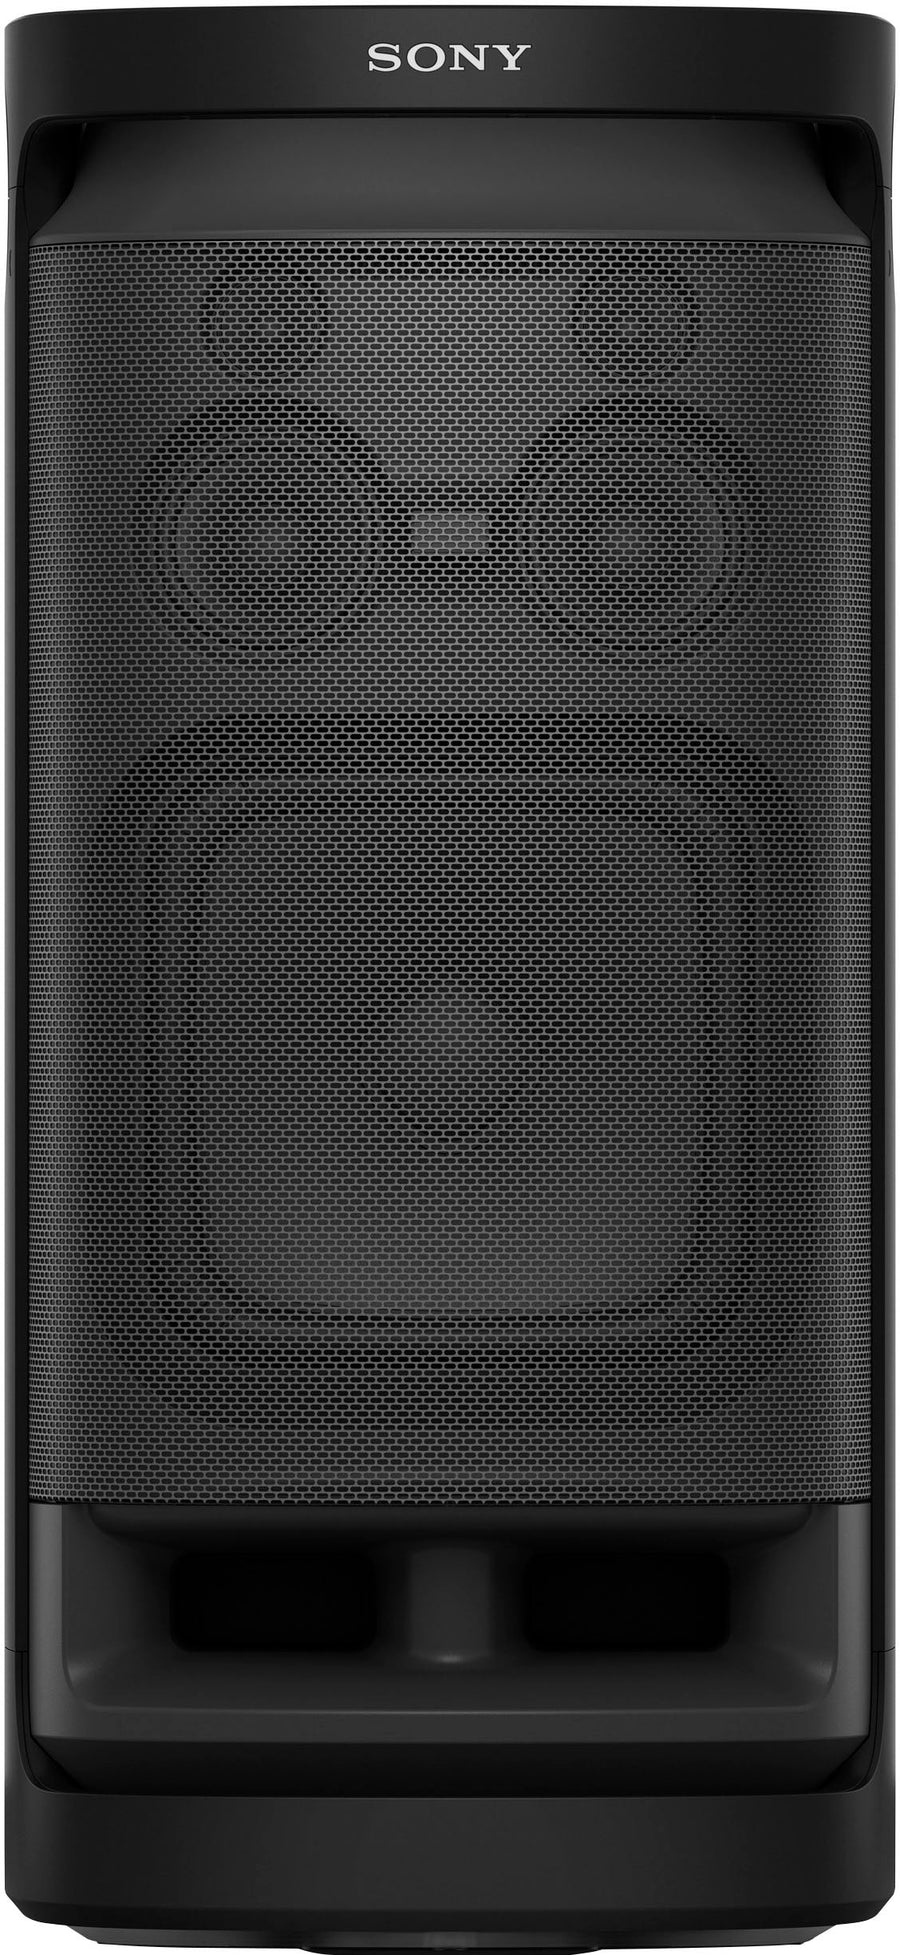 Sony XV900 X-Series BLUETOOTH Party Speaker - Black_0